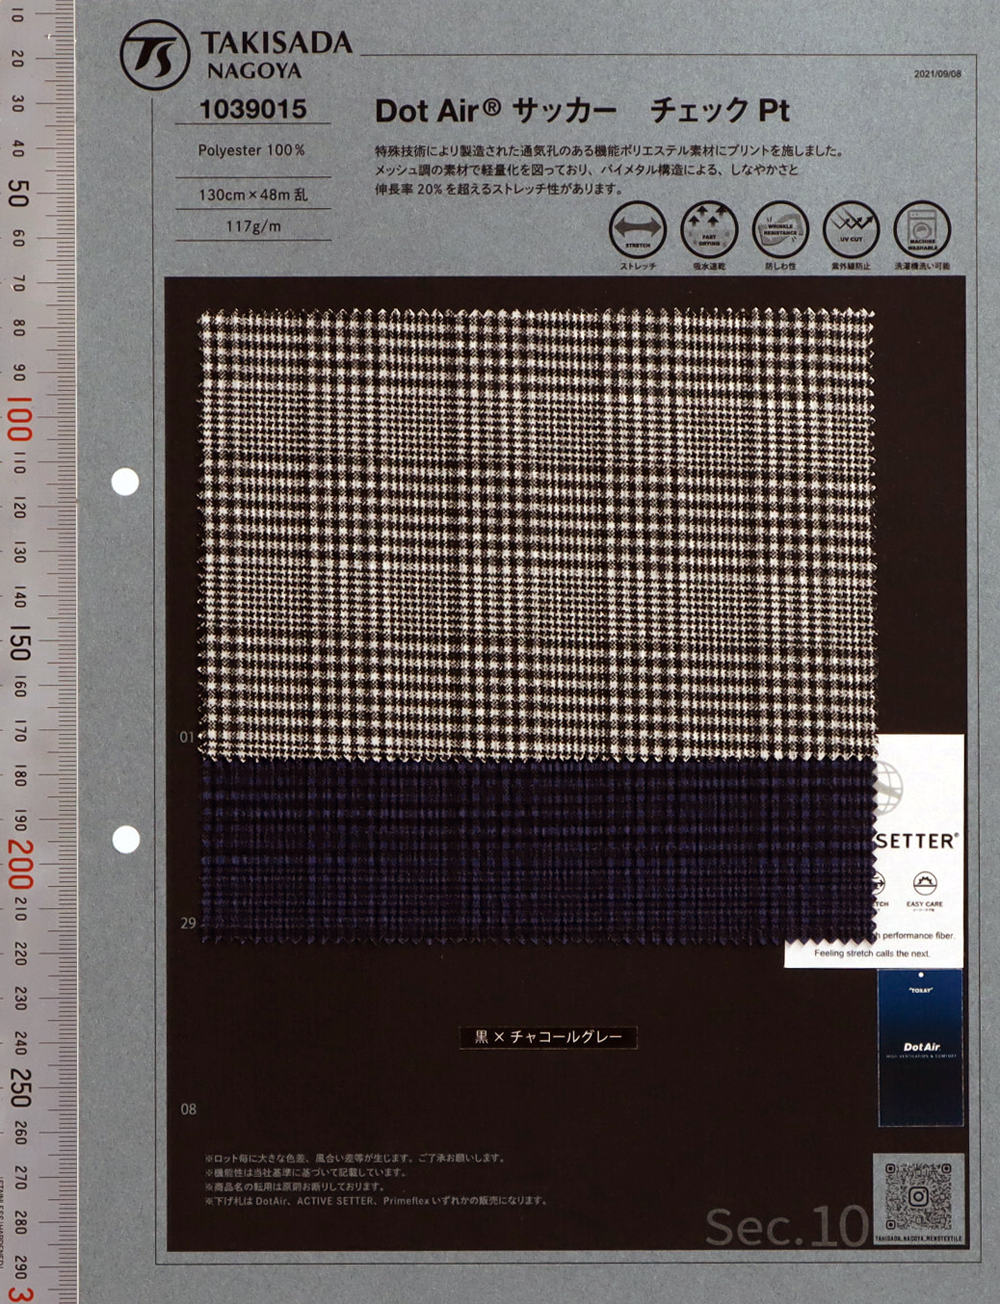 1039015 Dot Air Seersucker Patrón De Cuadros Glen[Fabrica Textil] Takisada Nagoya